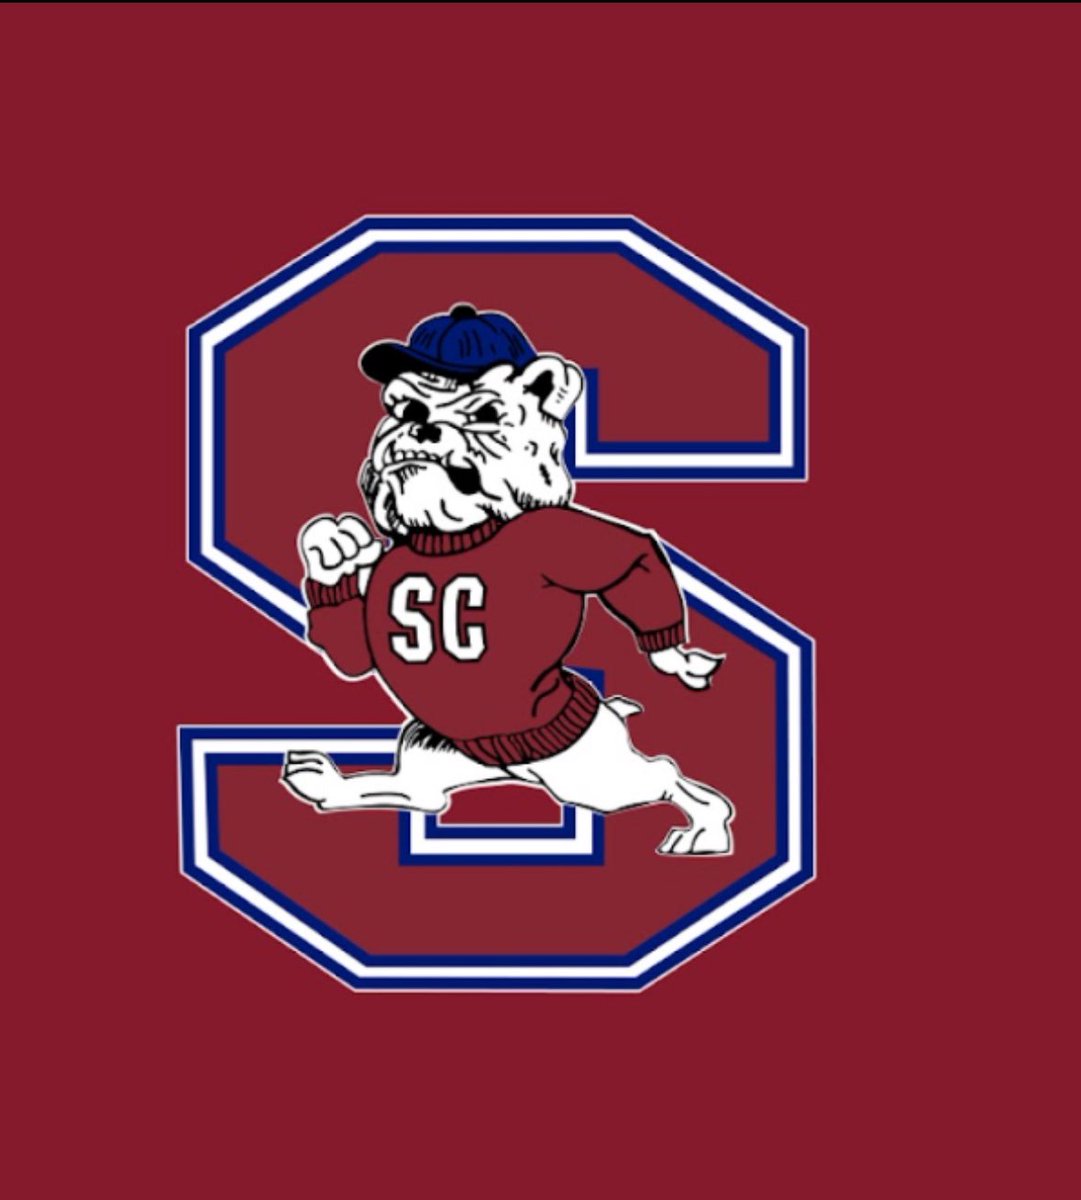 Tomorrow April 13 I will be attending South Carolina university for junior day #gobulldogs #southcarolinauniversity @CoachStylesJr @247recruiting @coast2coasttc @PrepRedzoneFL @ODFBall